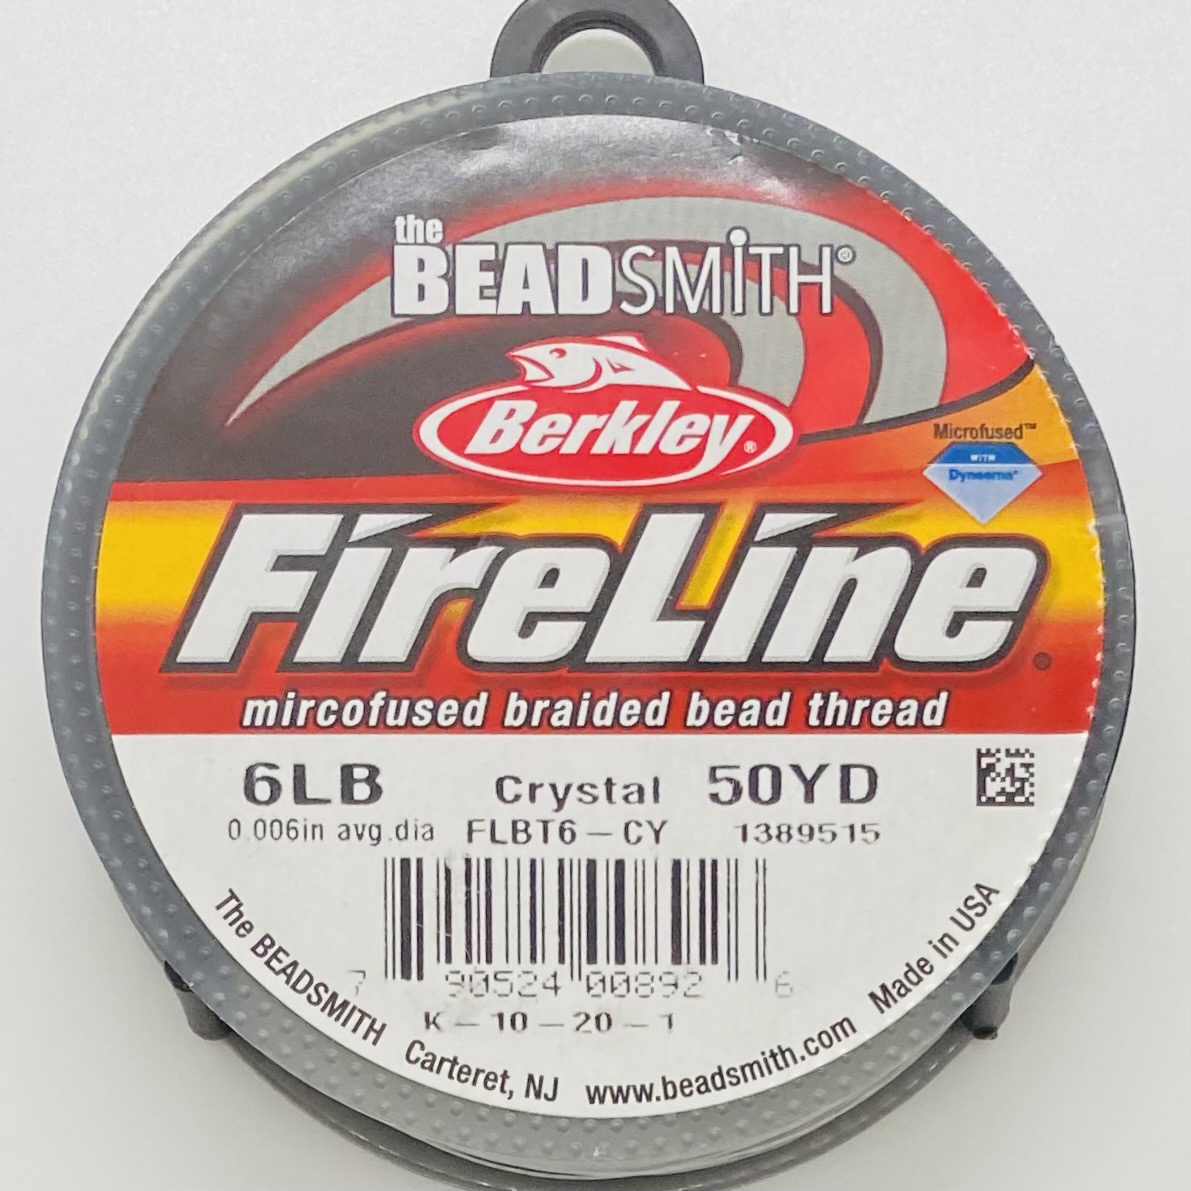 Thread, Berkley Fireline, Gel-Spun Polyethylene, Round, 0.15mm Diameter, Smoke, 6-Pound Test, 50-Yard Spool